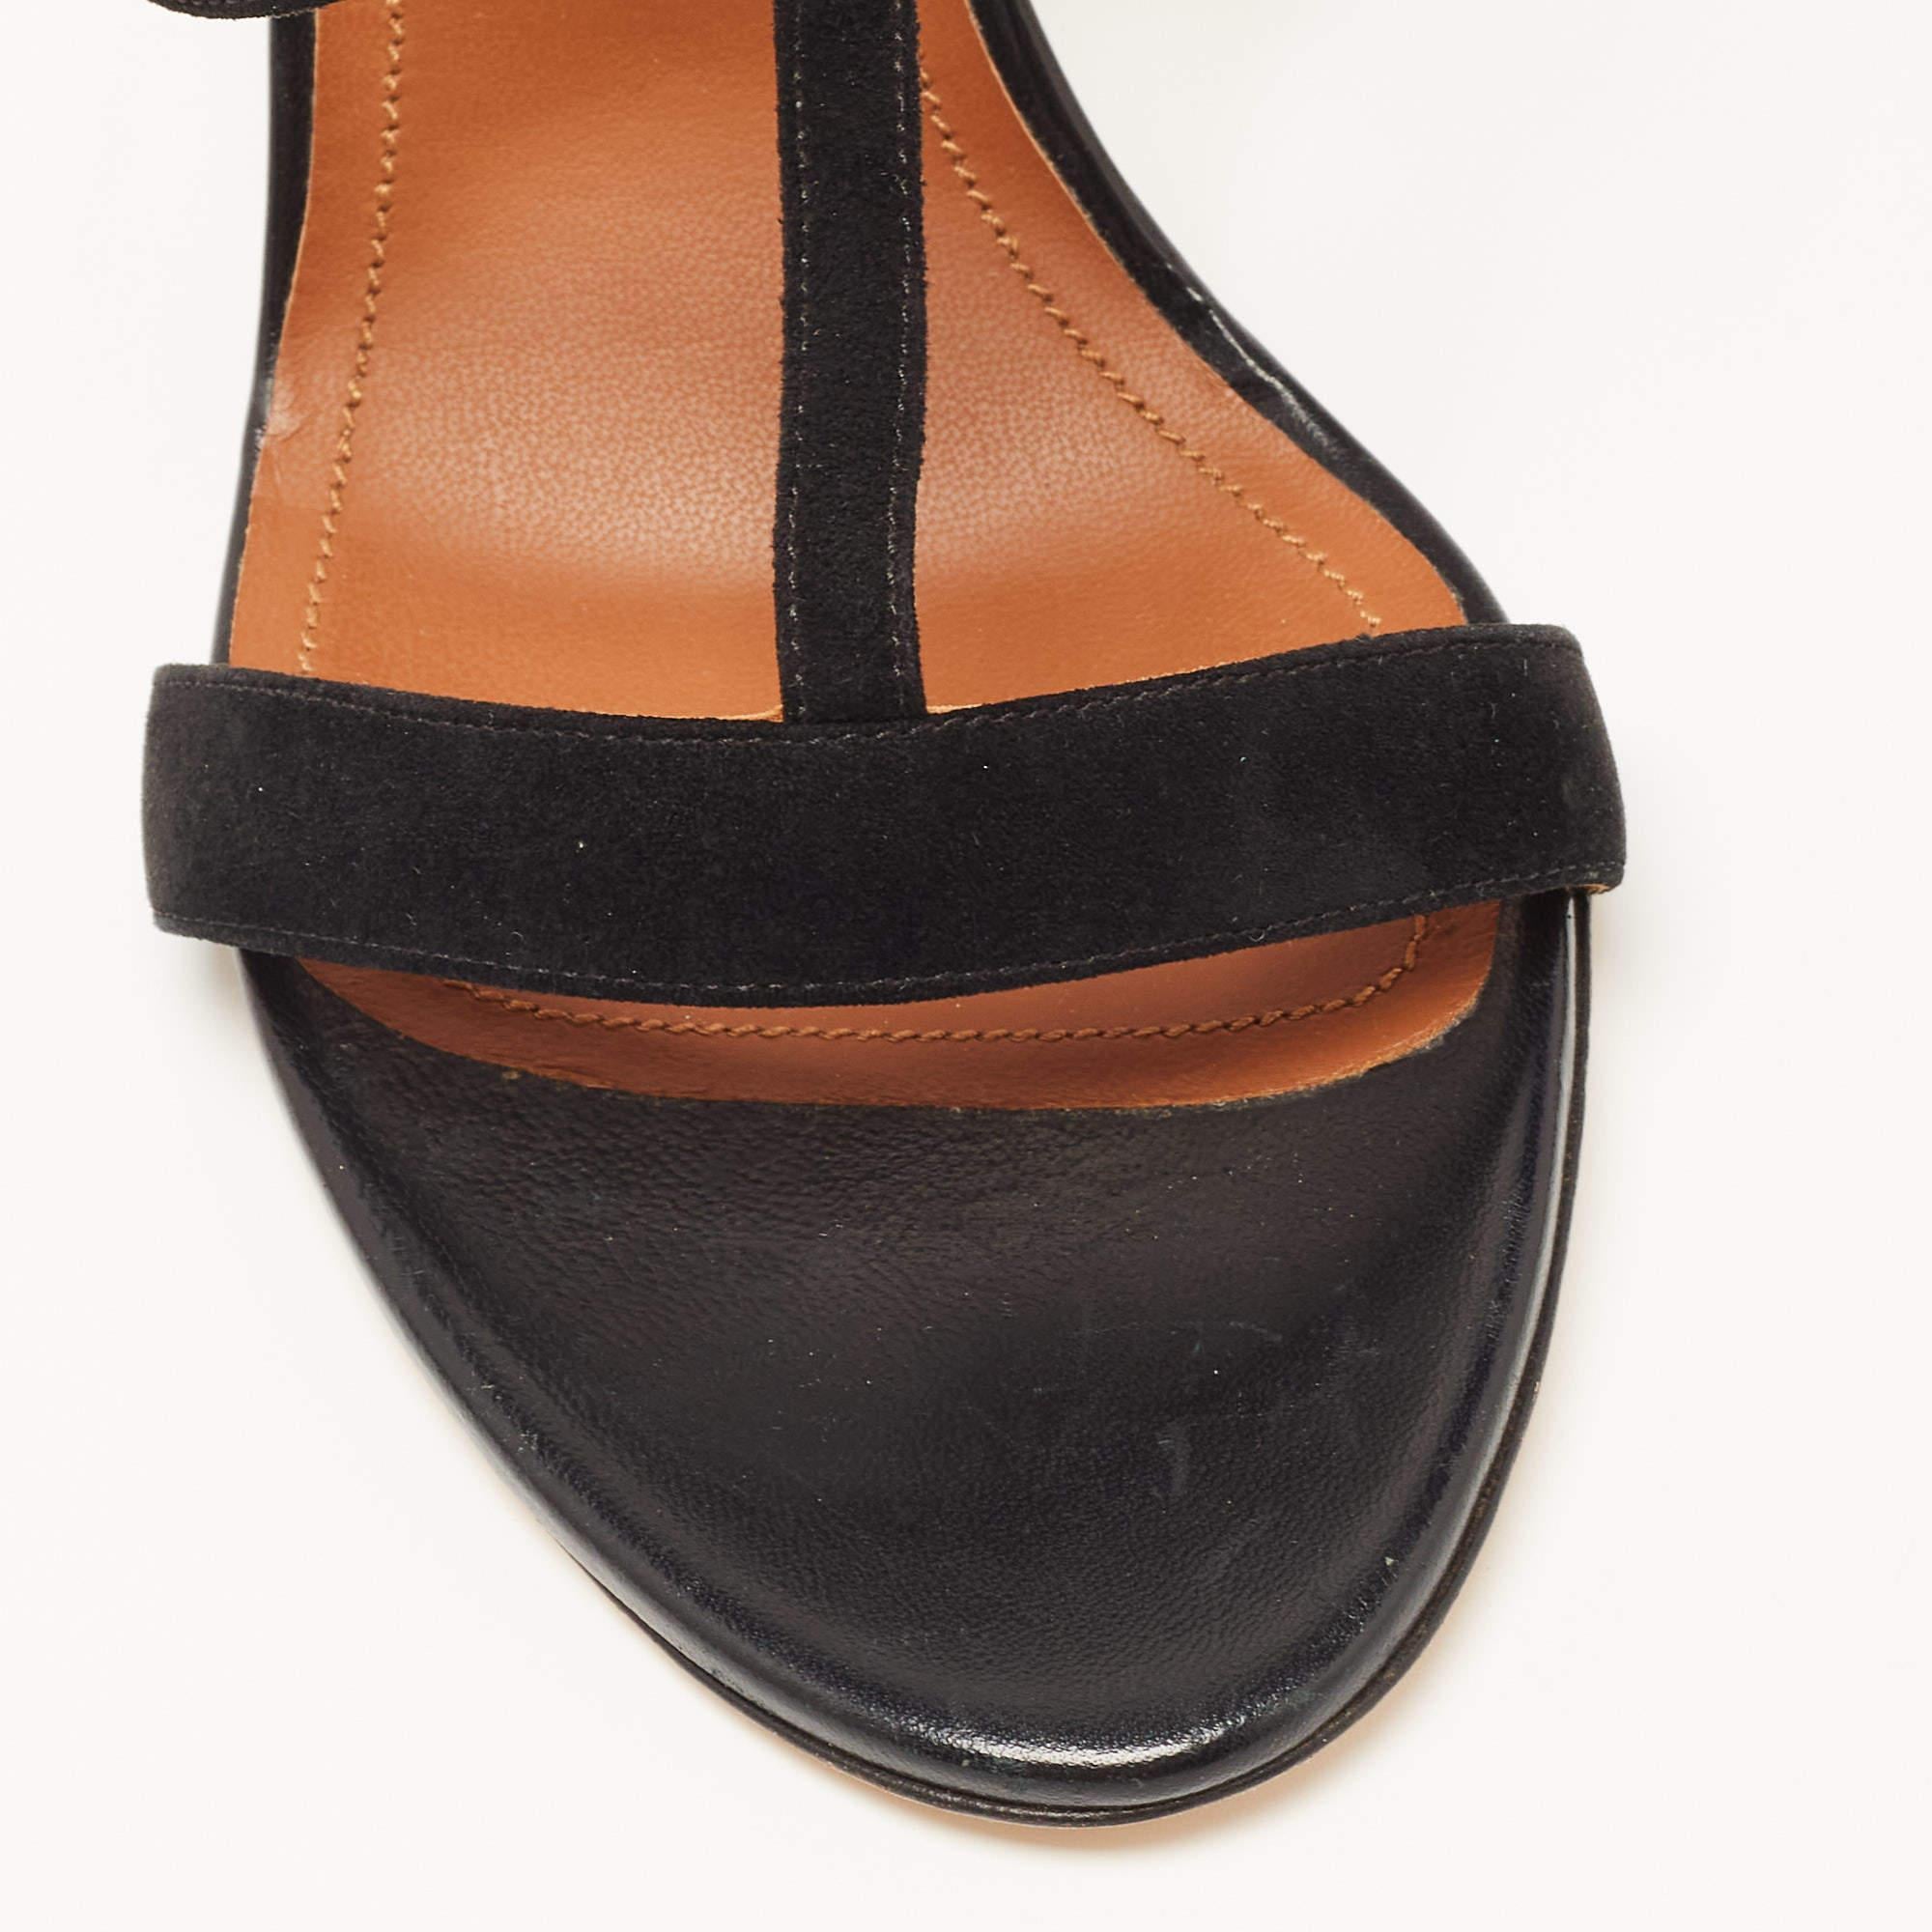 Malone Souliers Black Suede Floral Embellished Ankle Strap Sandals Size 41 3